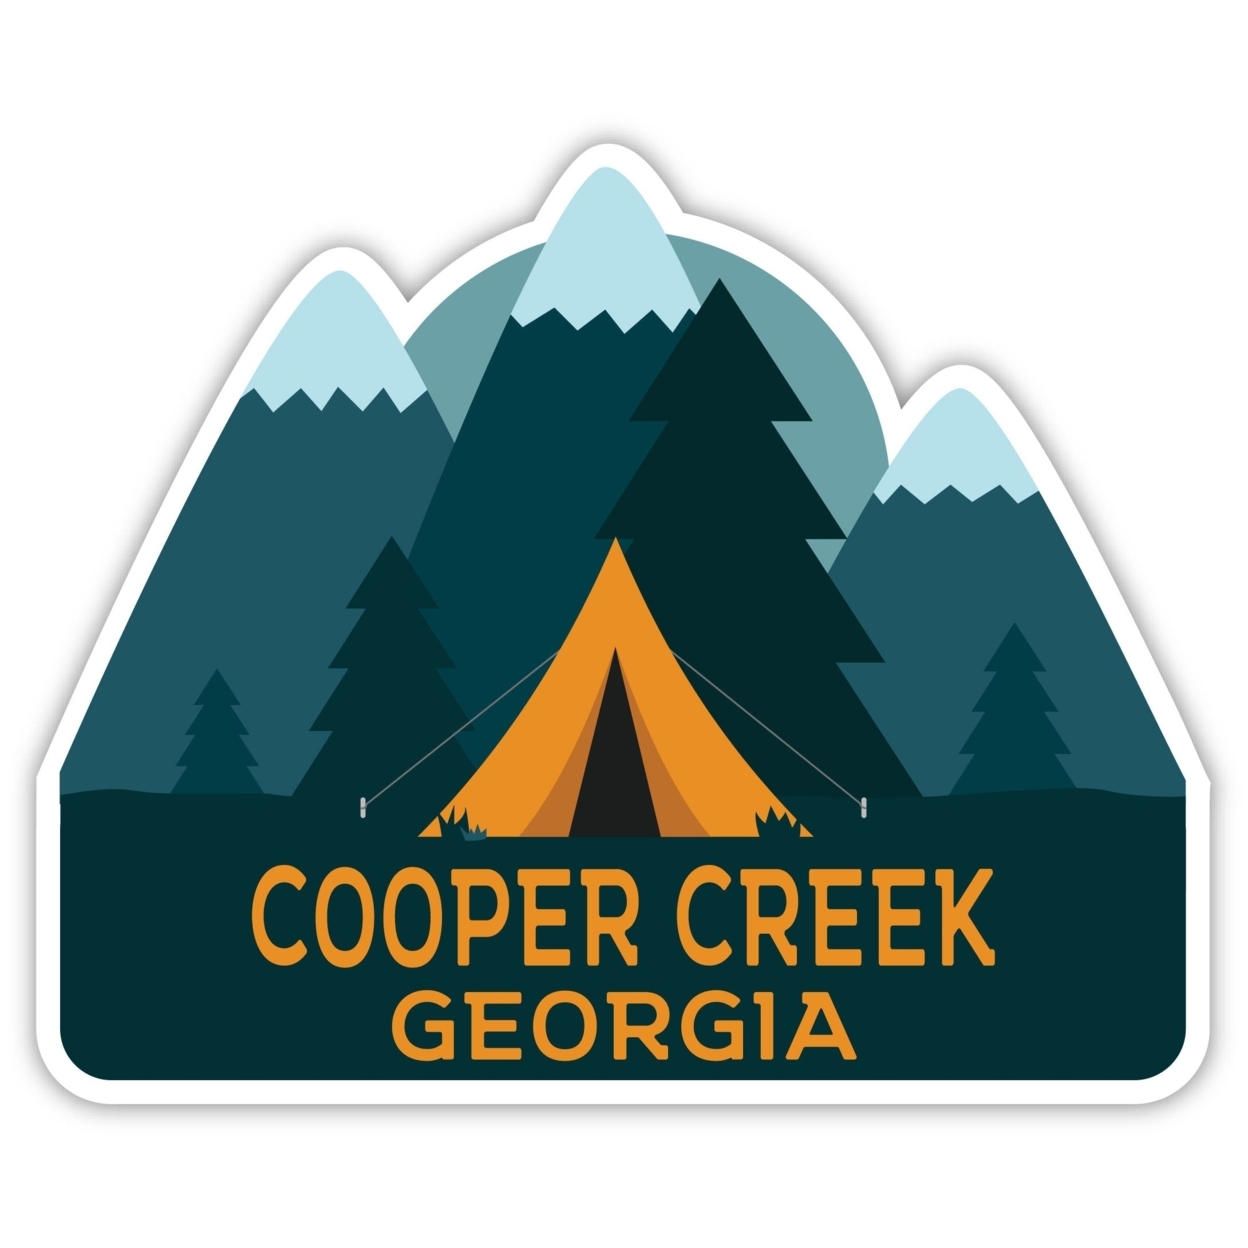 Cooper Creek Georgia Souvenir Decorative Stickers (Choose Theme And Size) - 4-Pack, 10-Inch, Tent